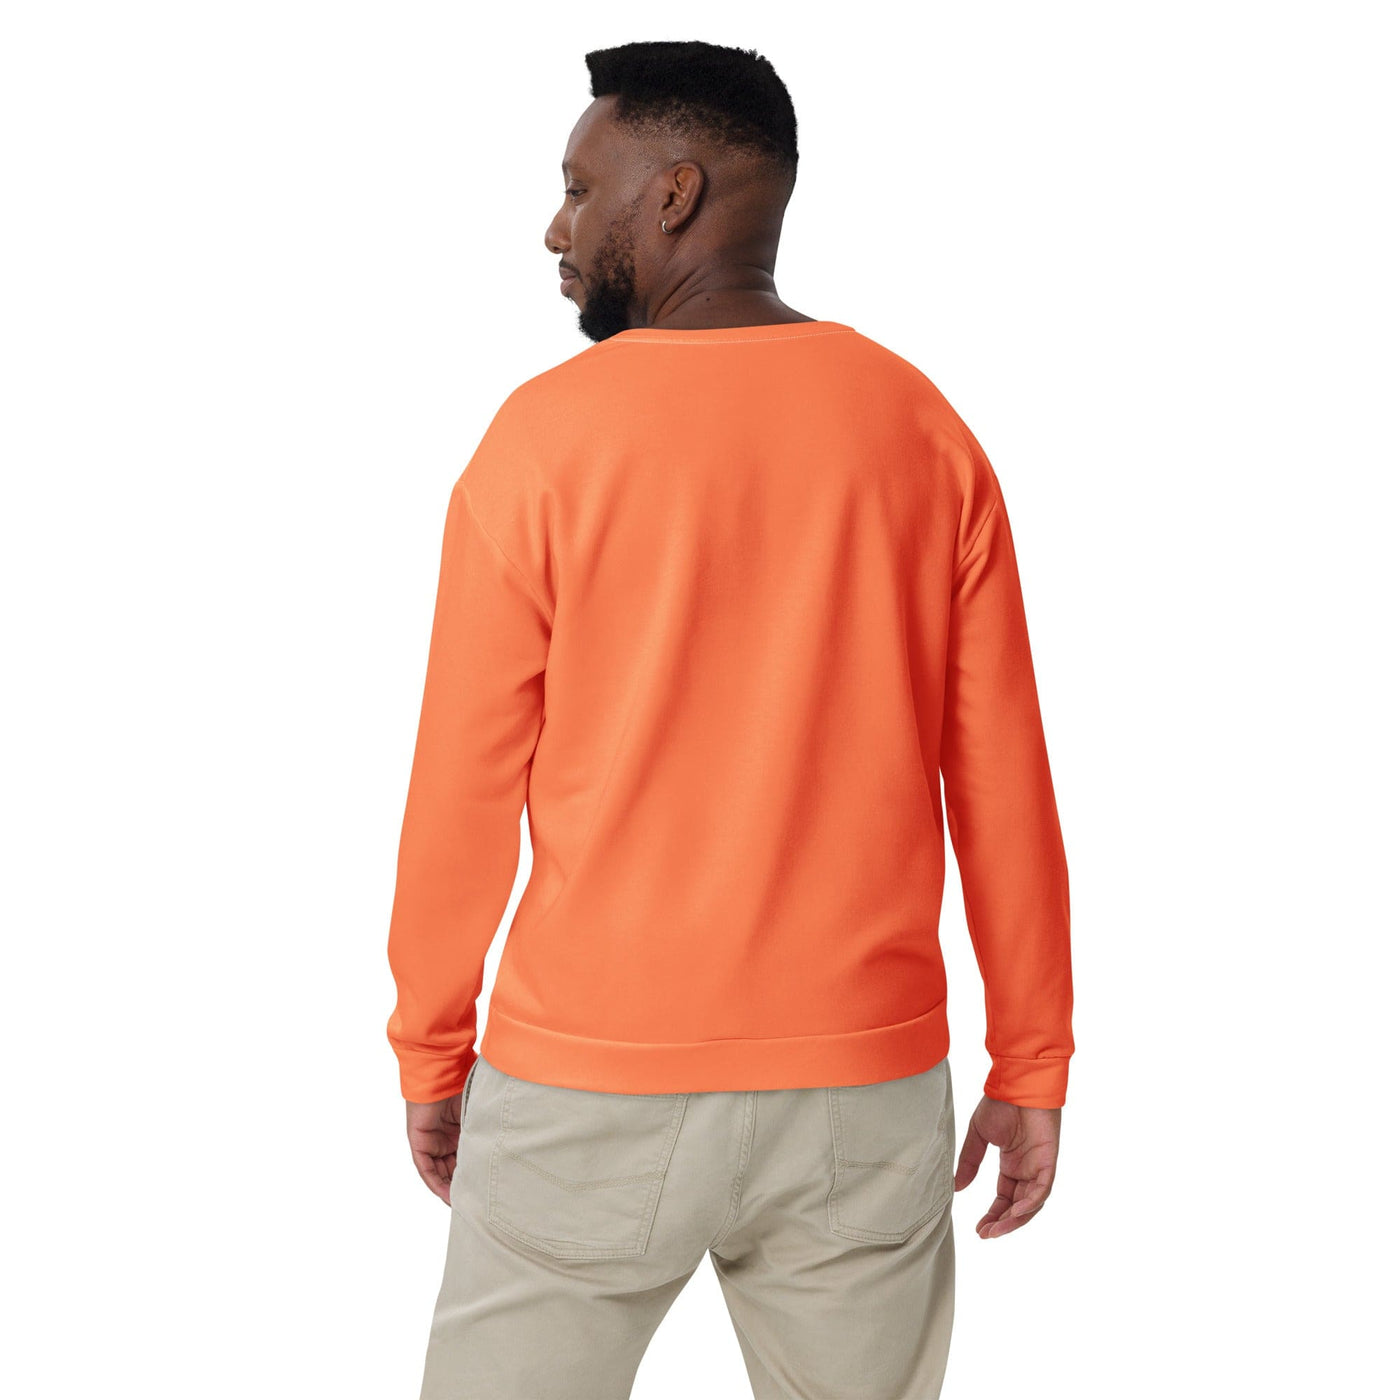 Graphic Sweatshirt For Men Coral Orange Red